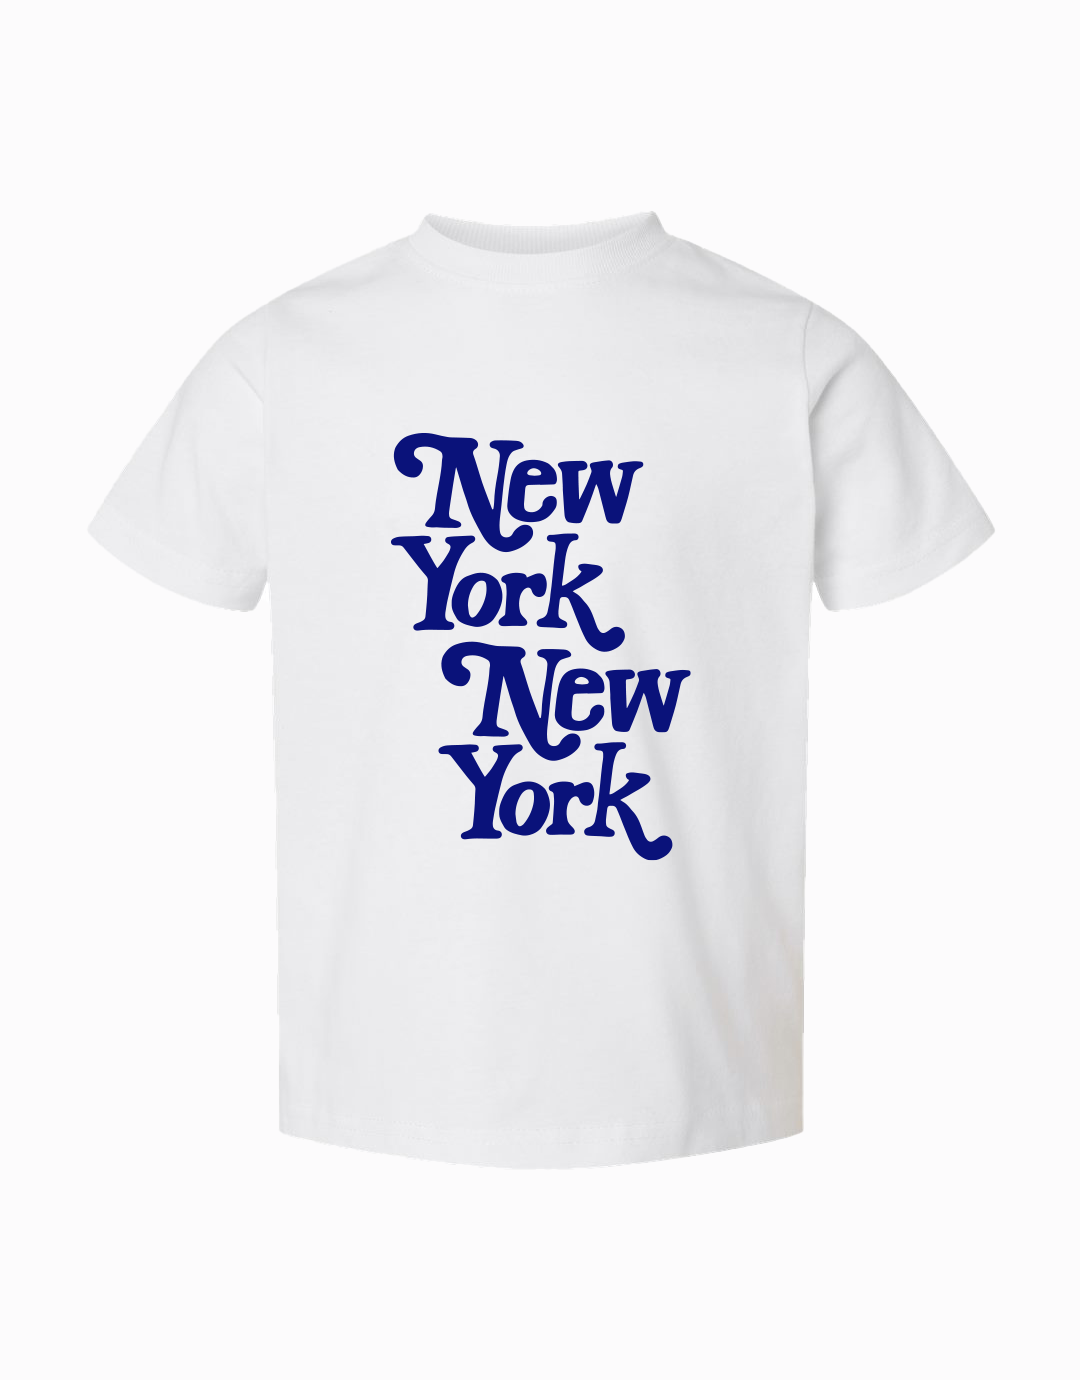 New York, New York T-Shirt | Prinkshop | Social Goods M / White/Blue